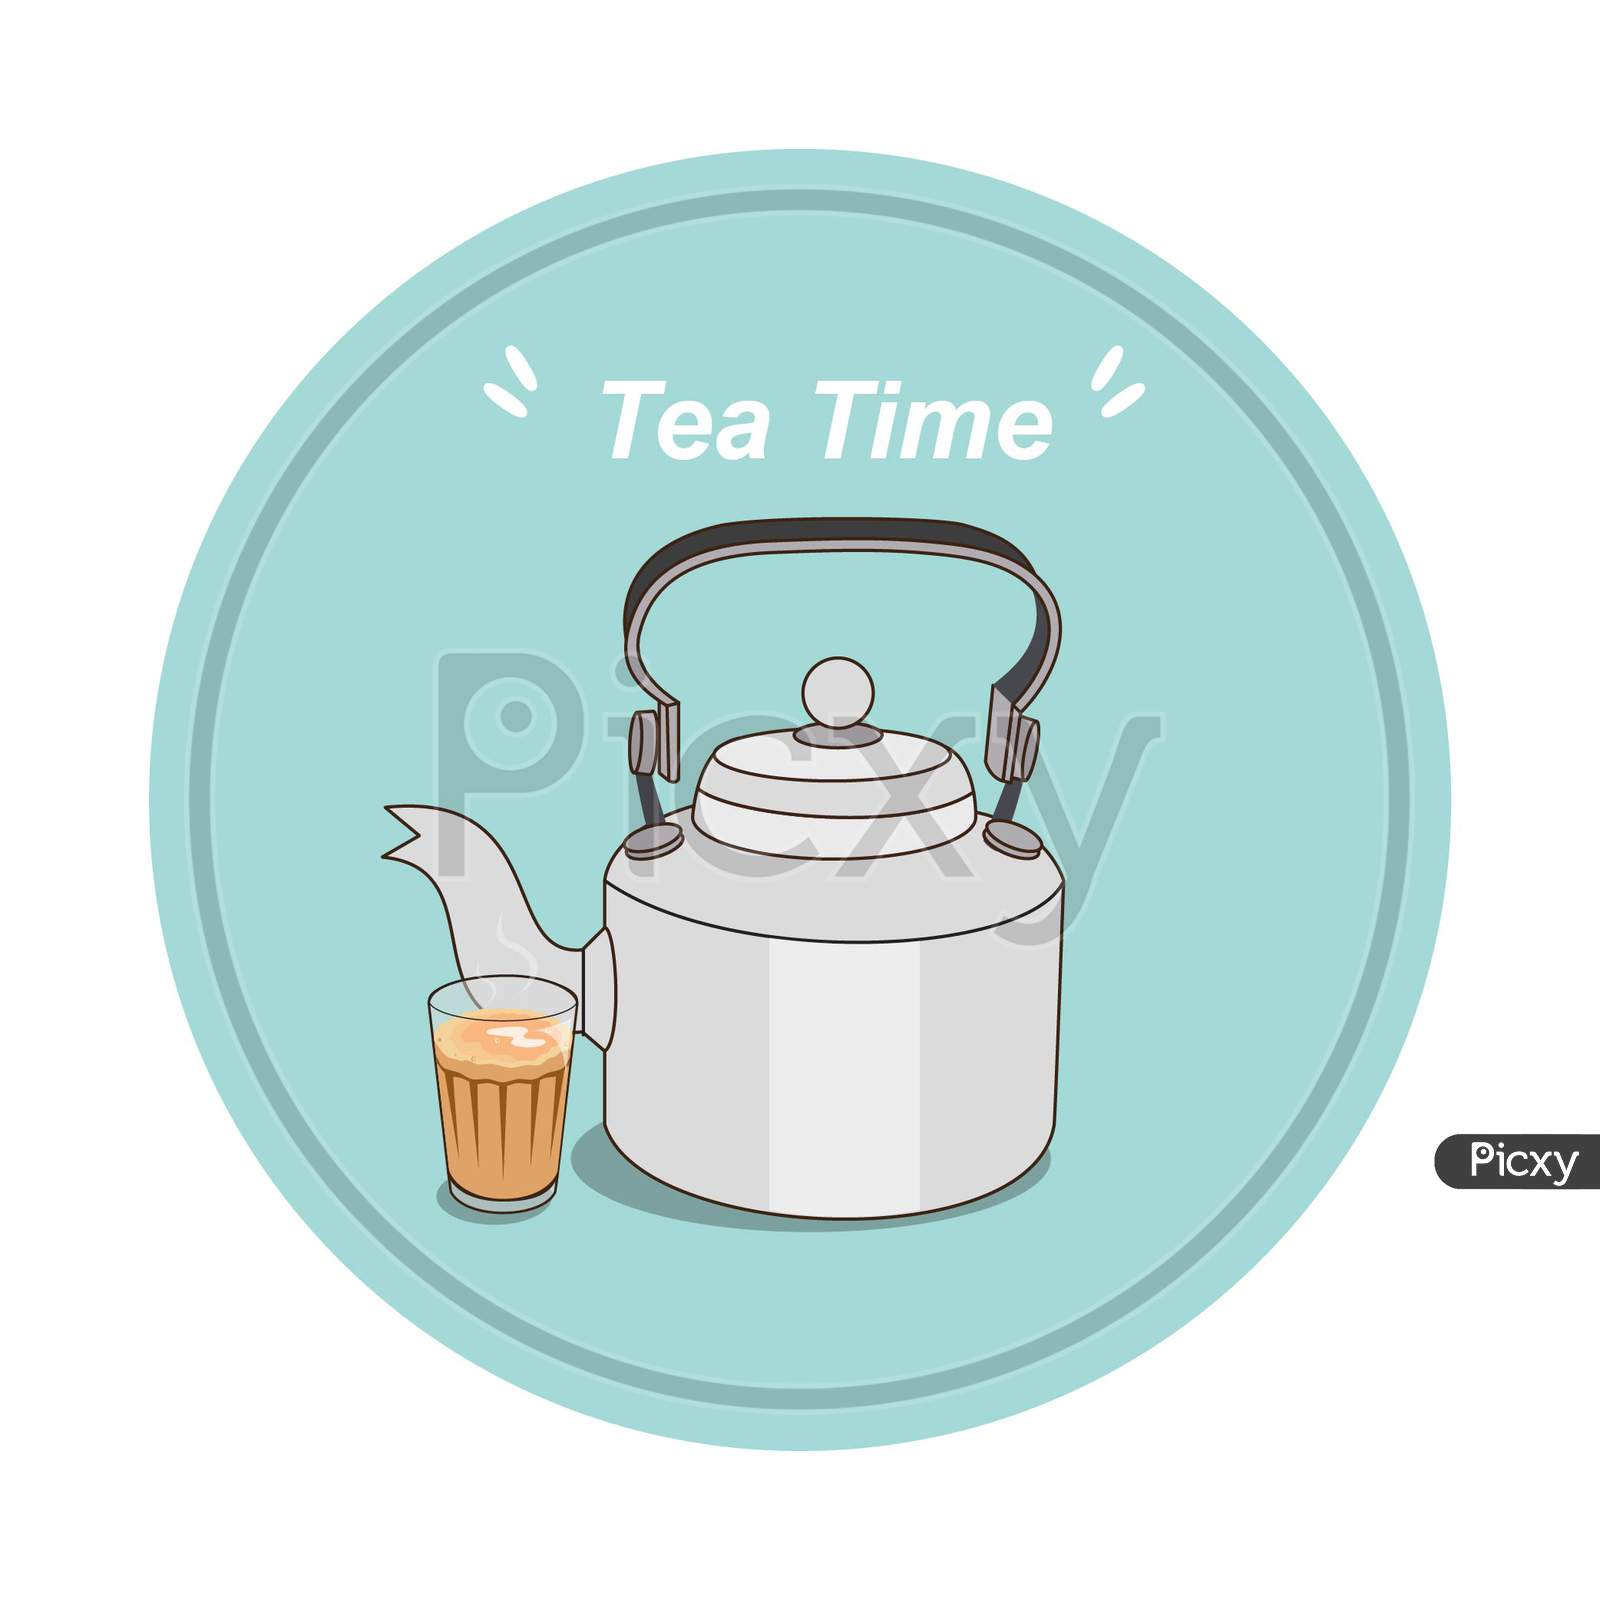 Tea and kettle illustration| Indian traditional teapot or kettle illustration